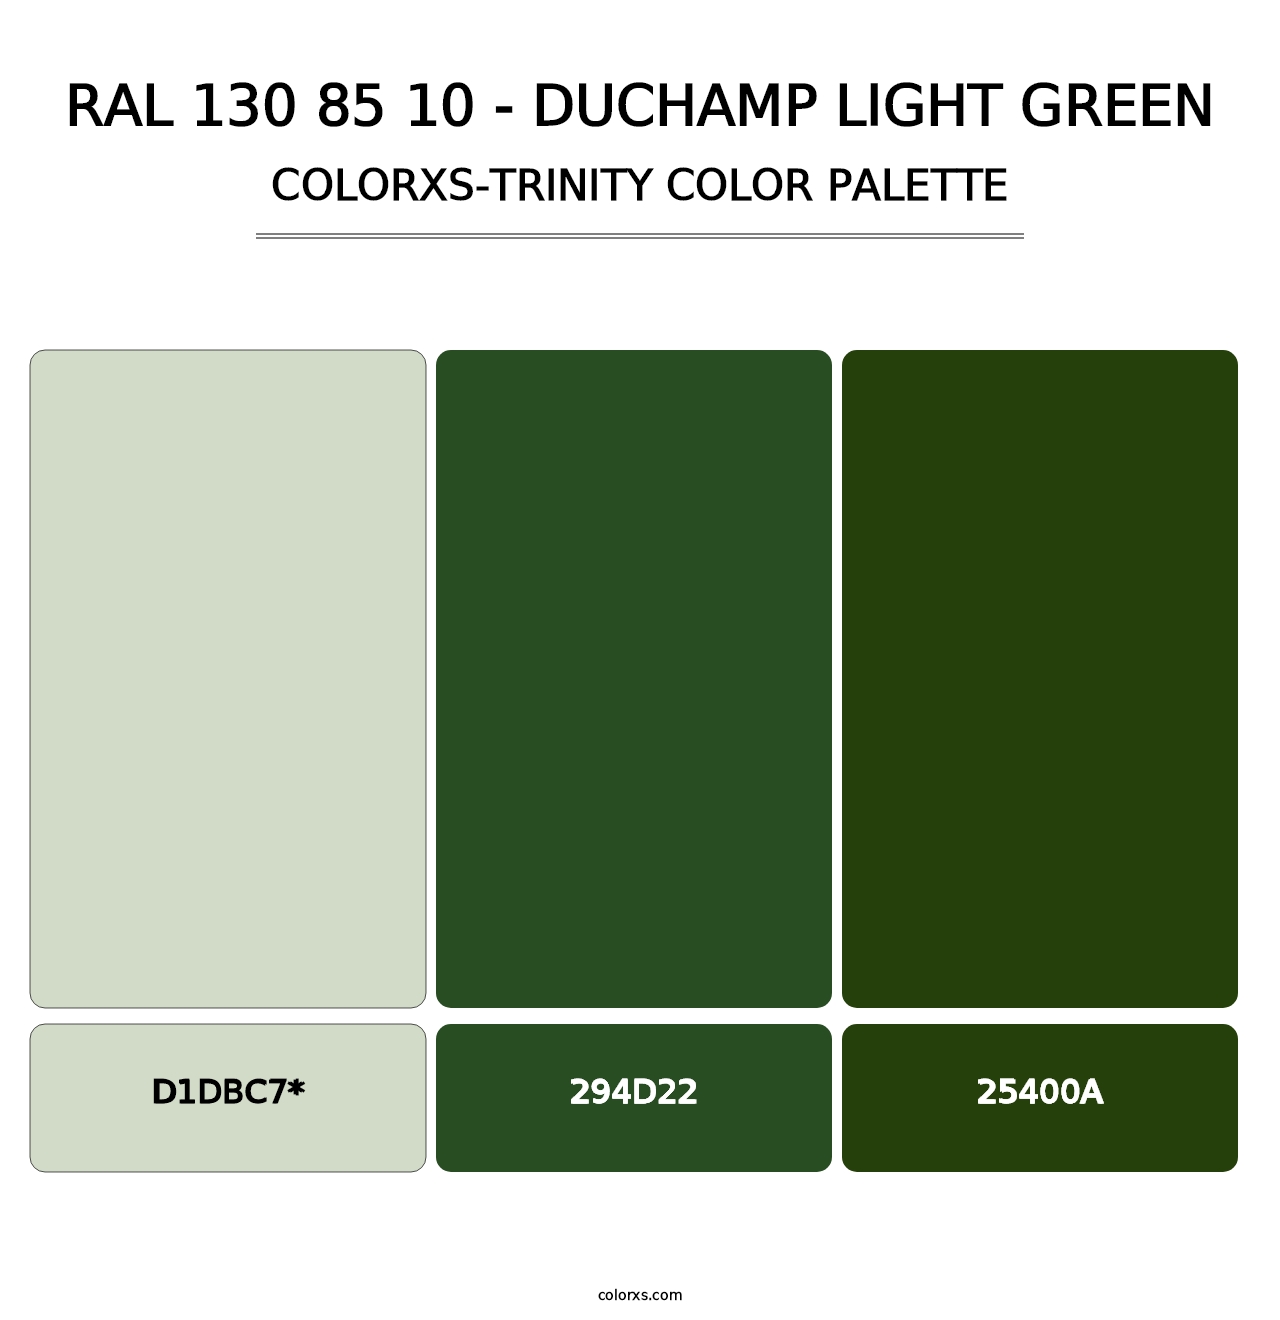 RAL 130 85 10 - Duchamp Light Green - Colorxs Trinity Palette